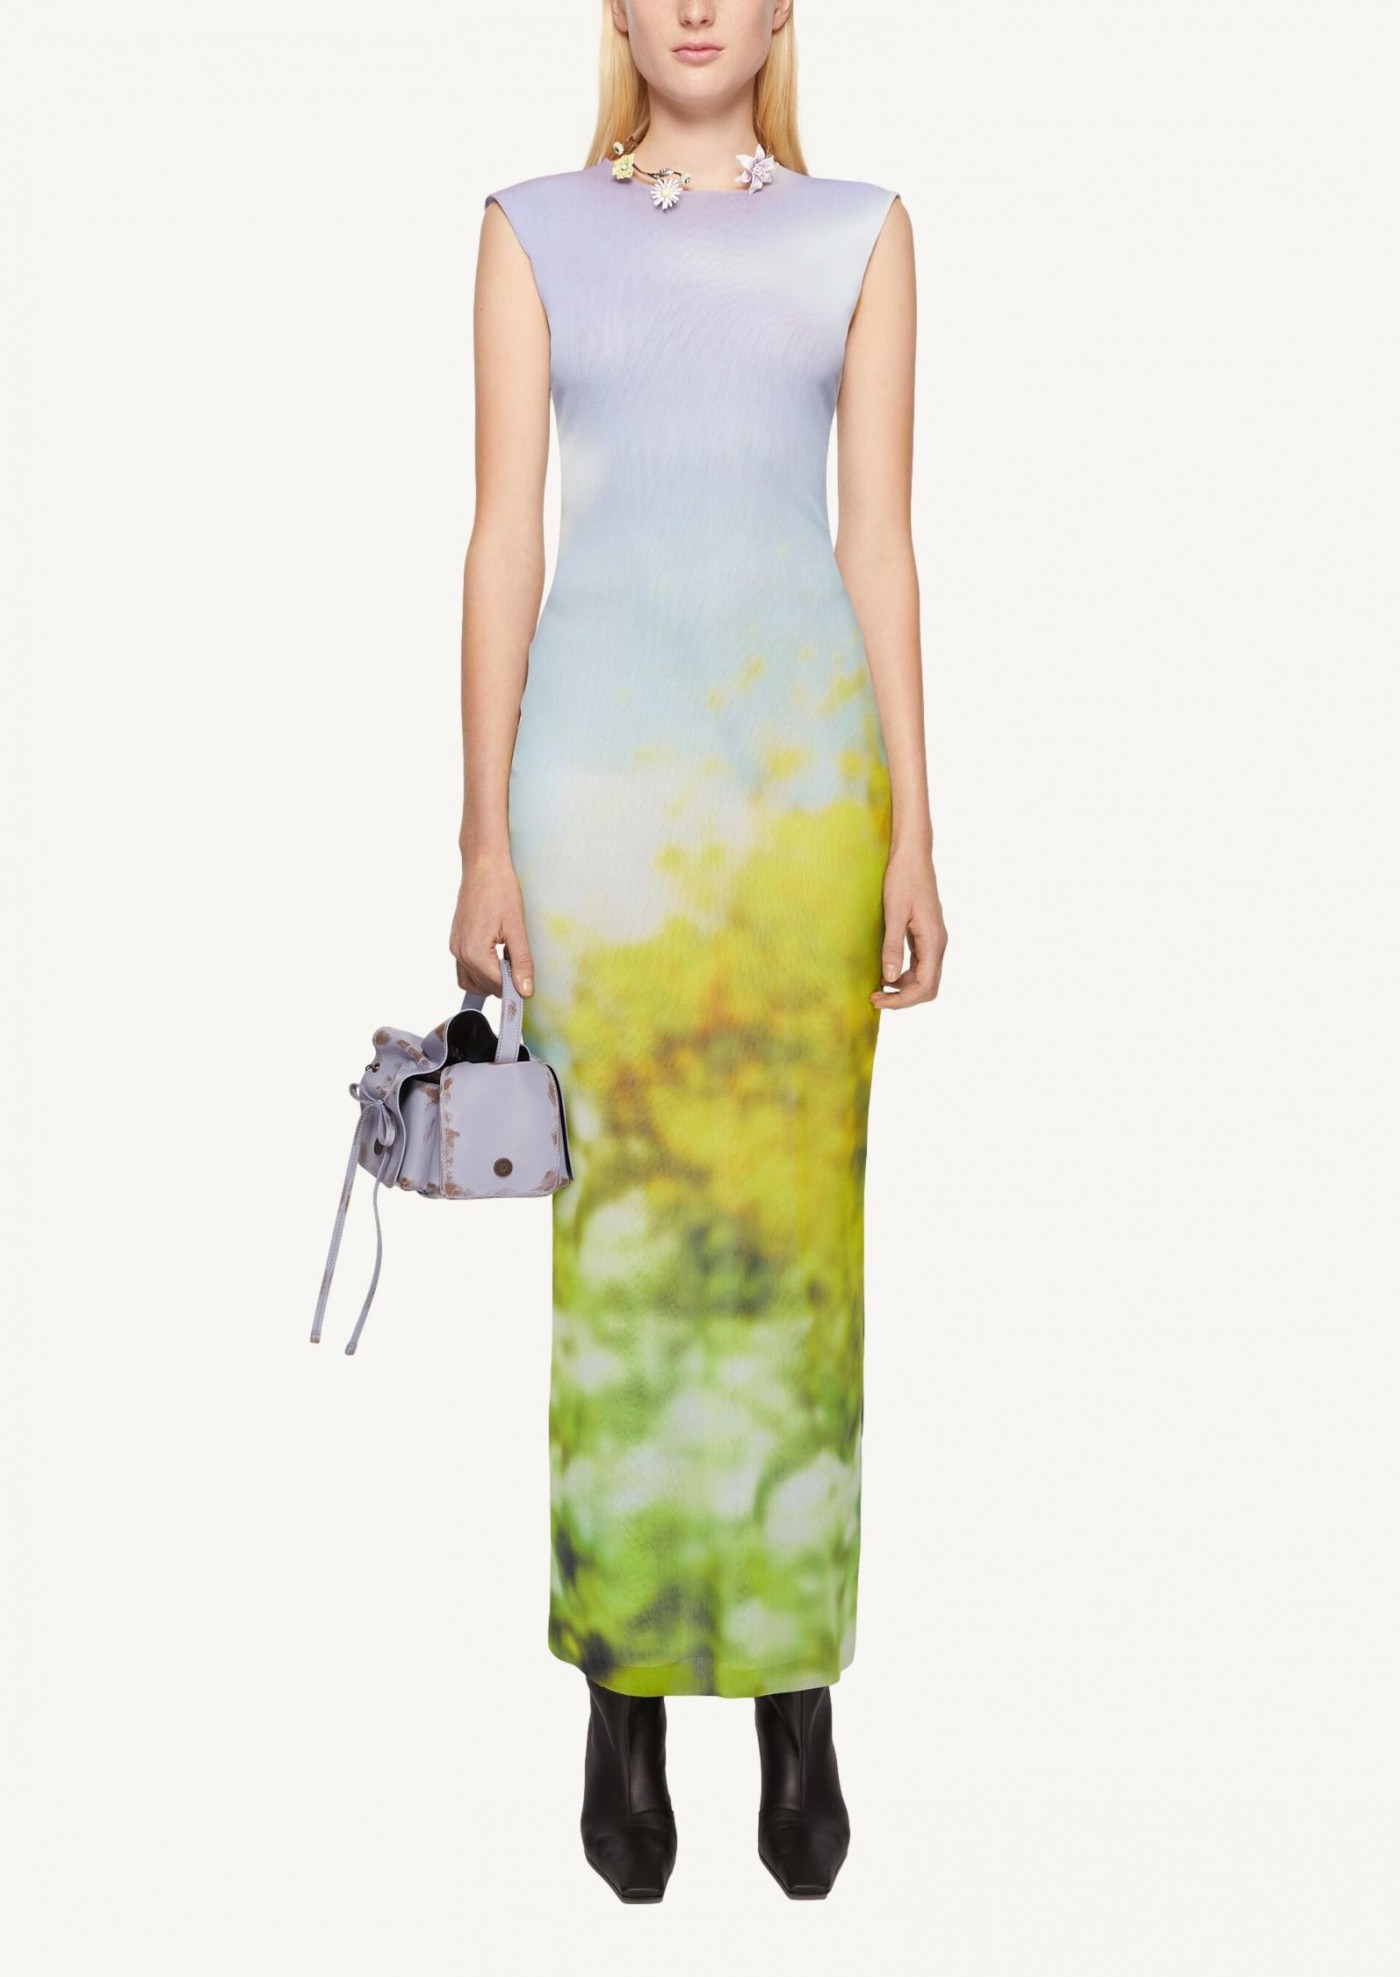 Blurred print sleeveless dress